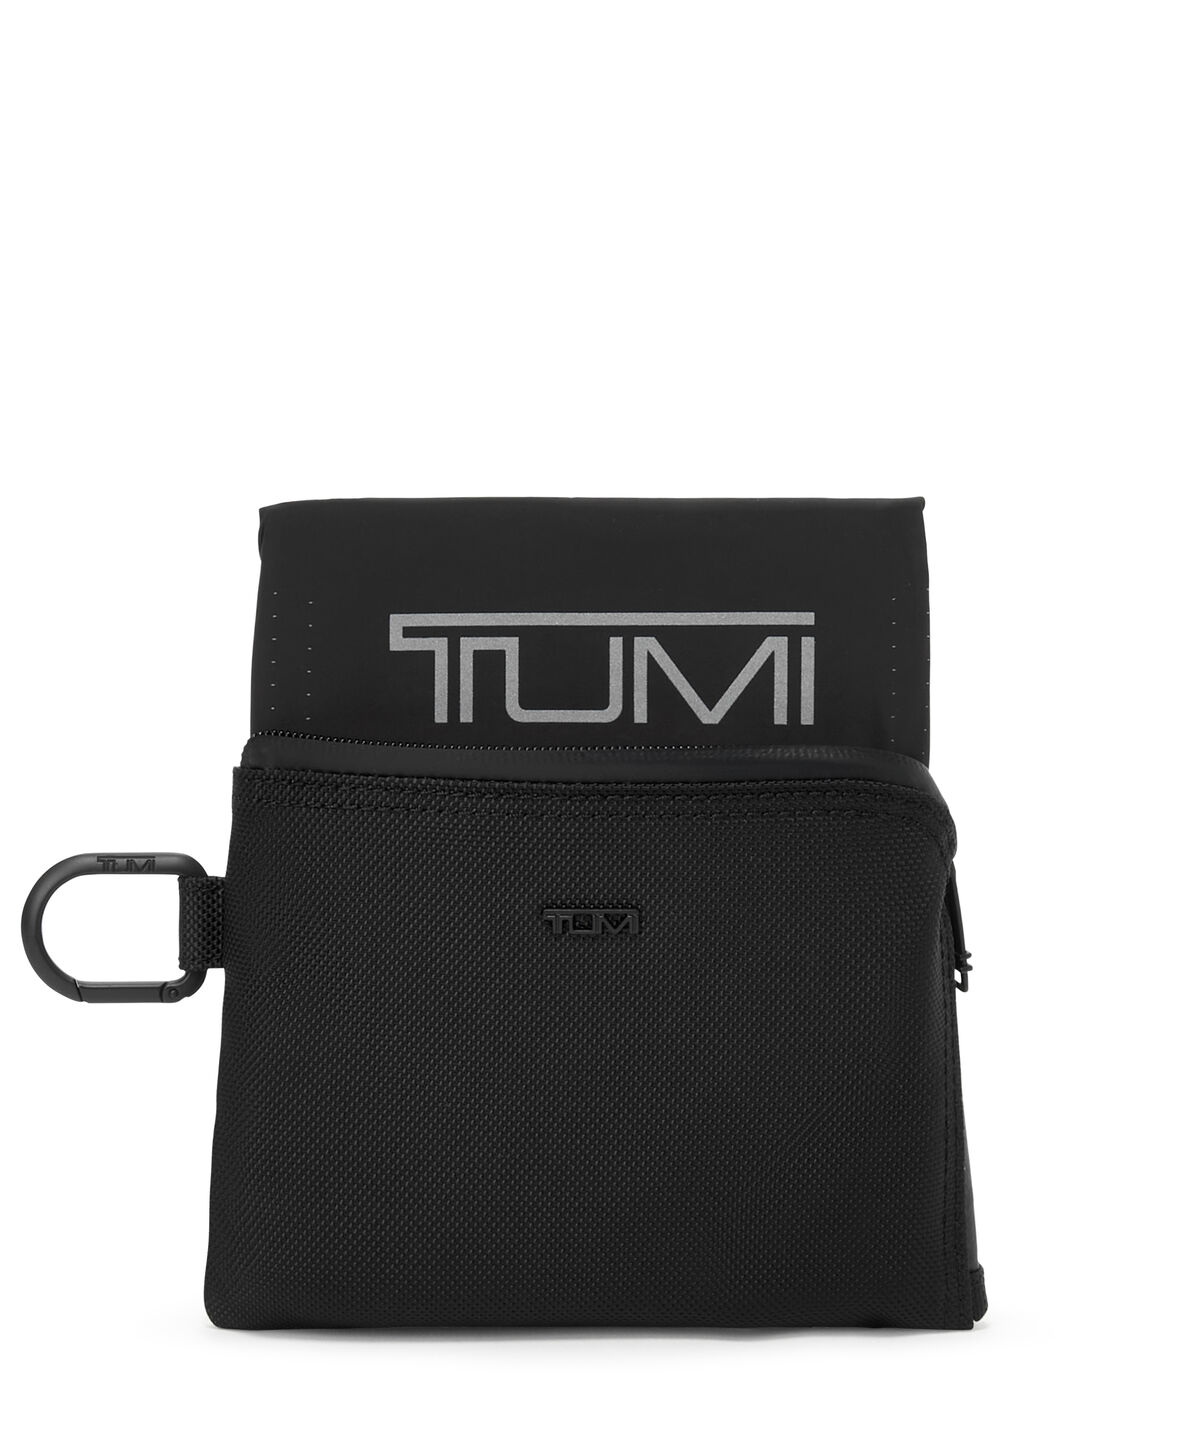 Tumi Travel Accessory PACKABLE RAIN COVER  Black